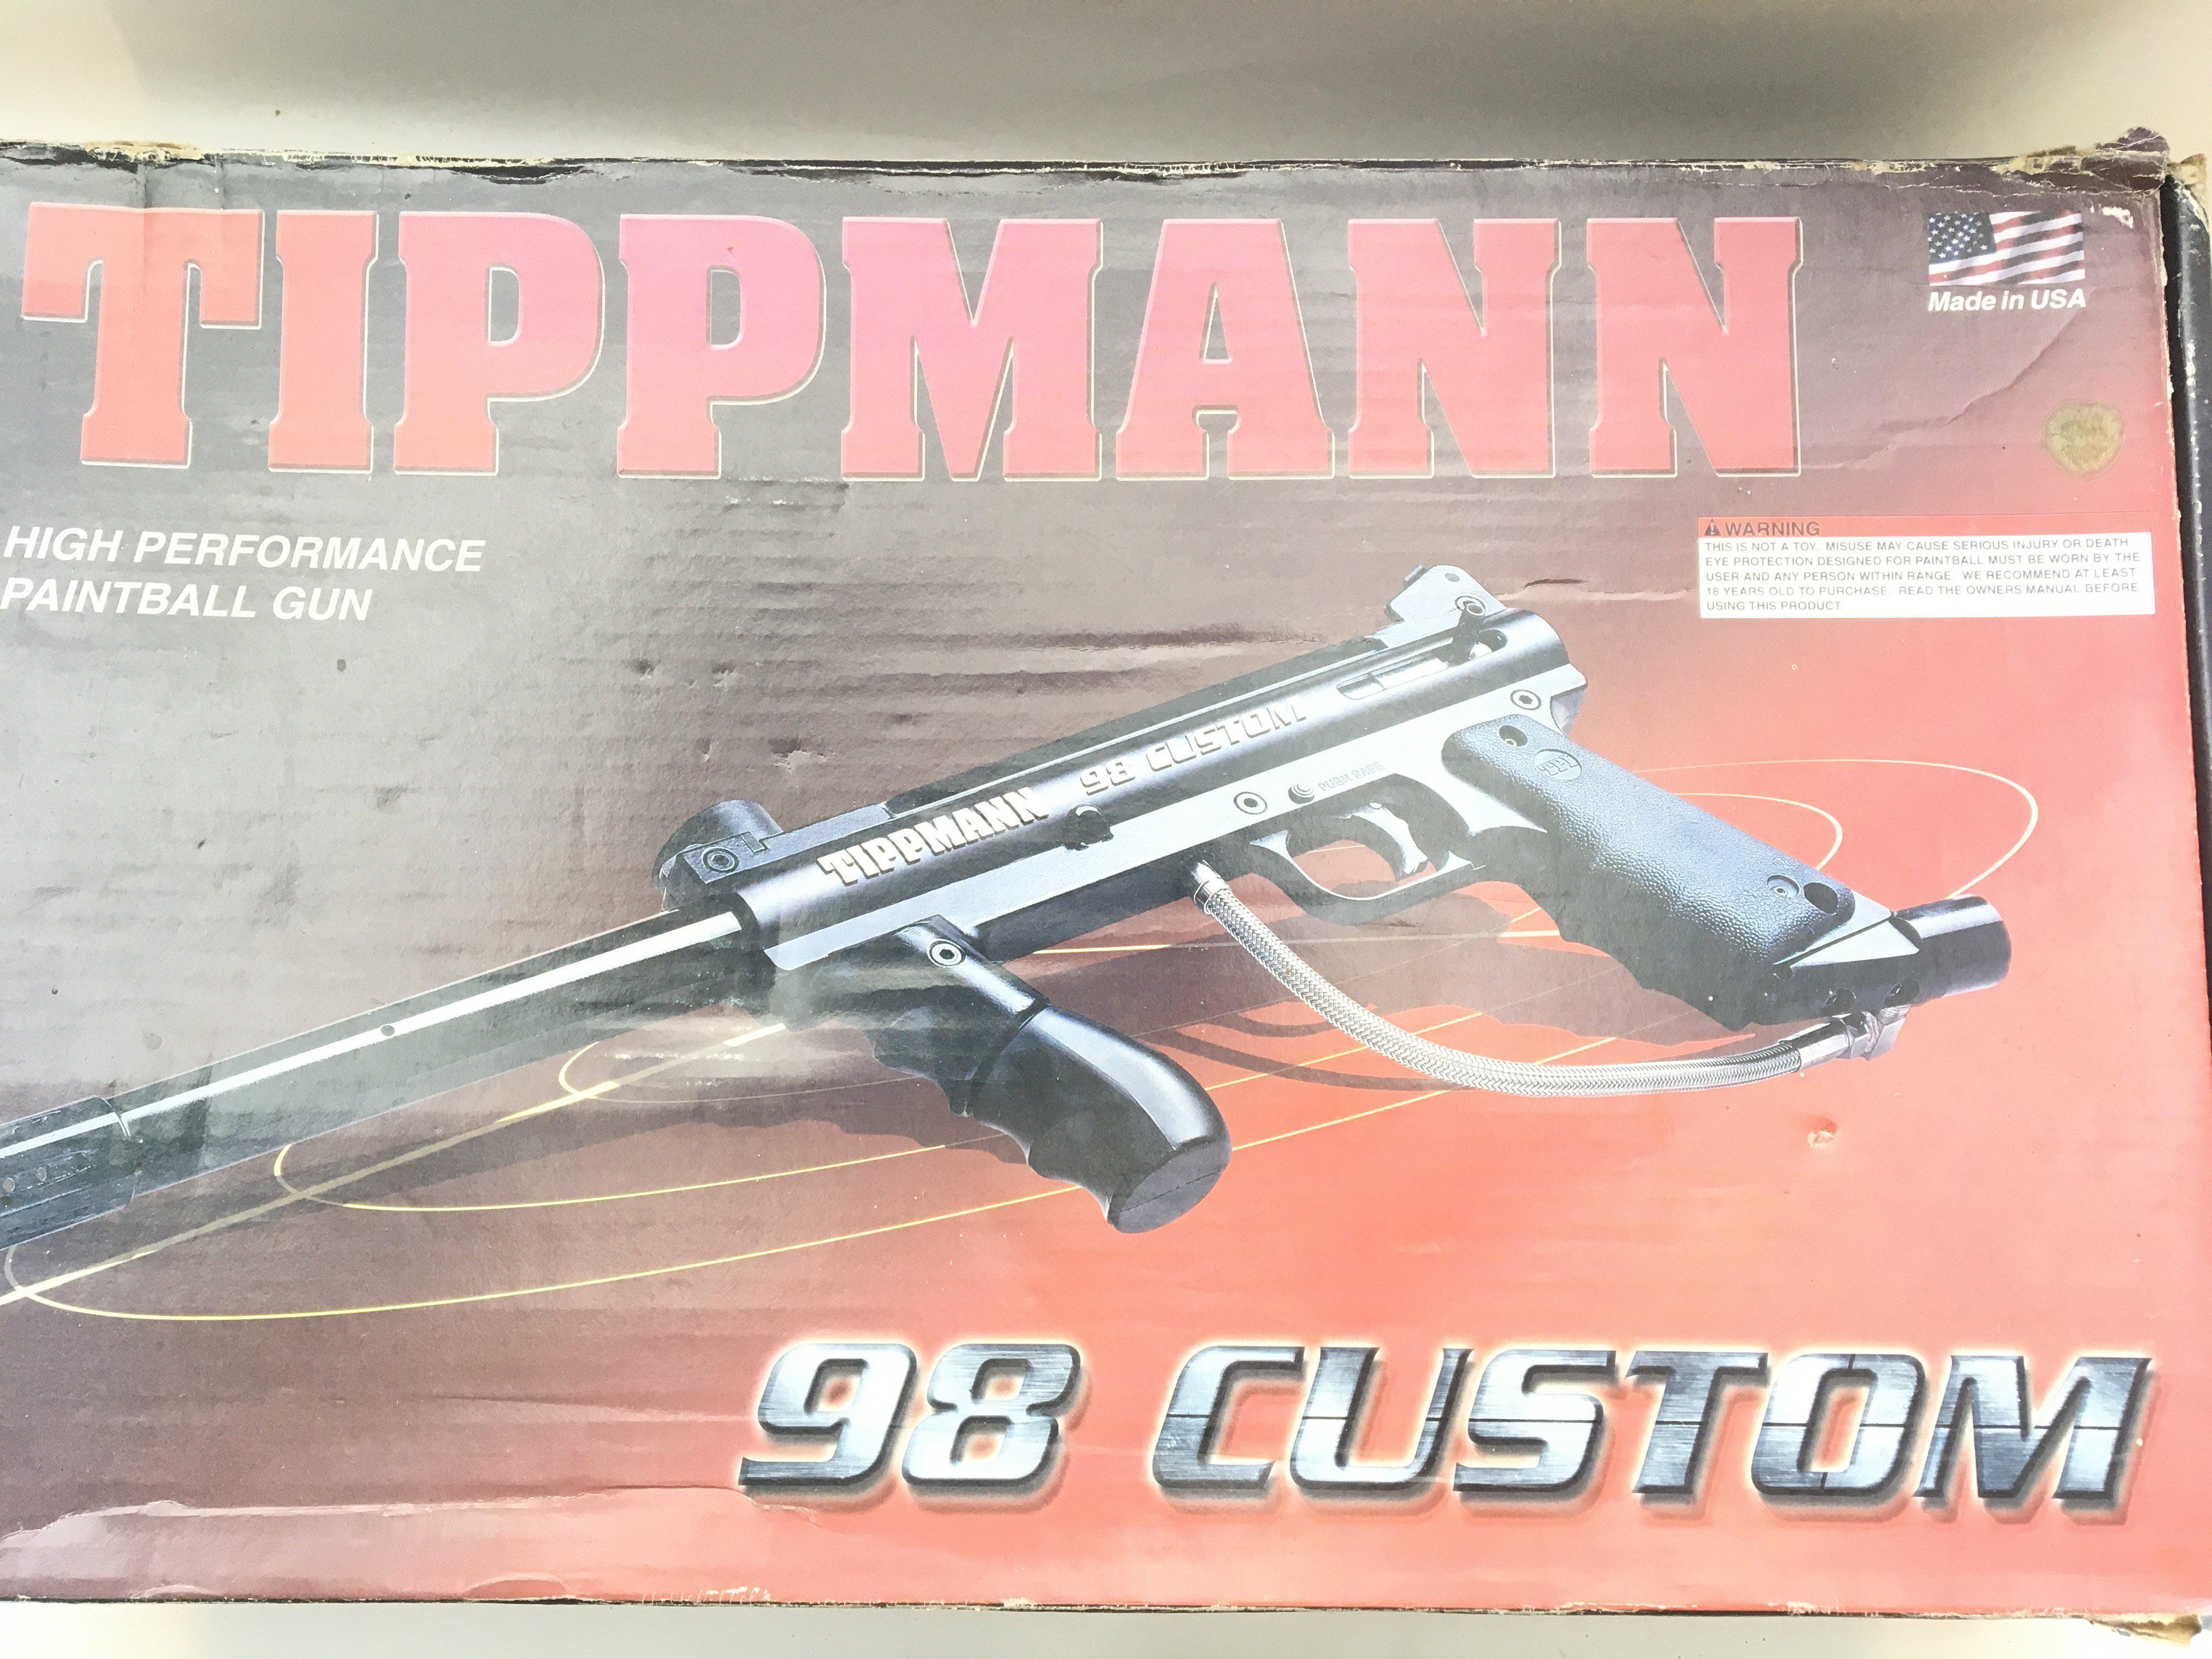 A Tippmann high performance paintball gun 98 custo